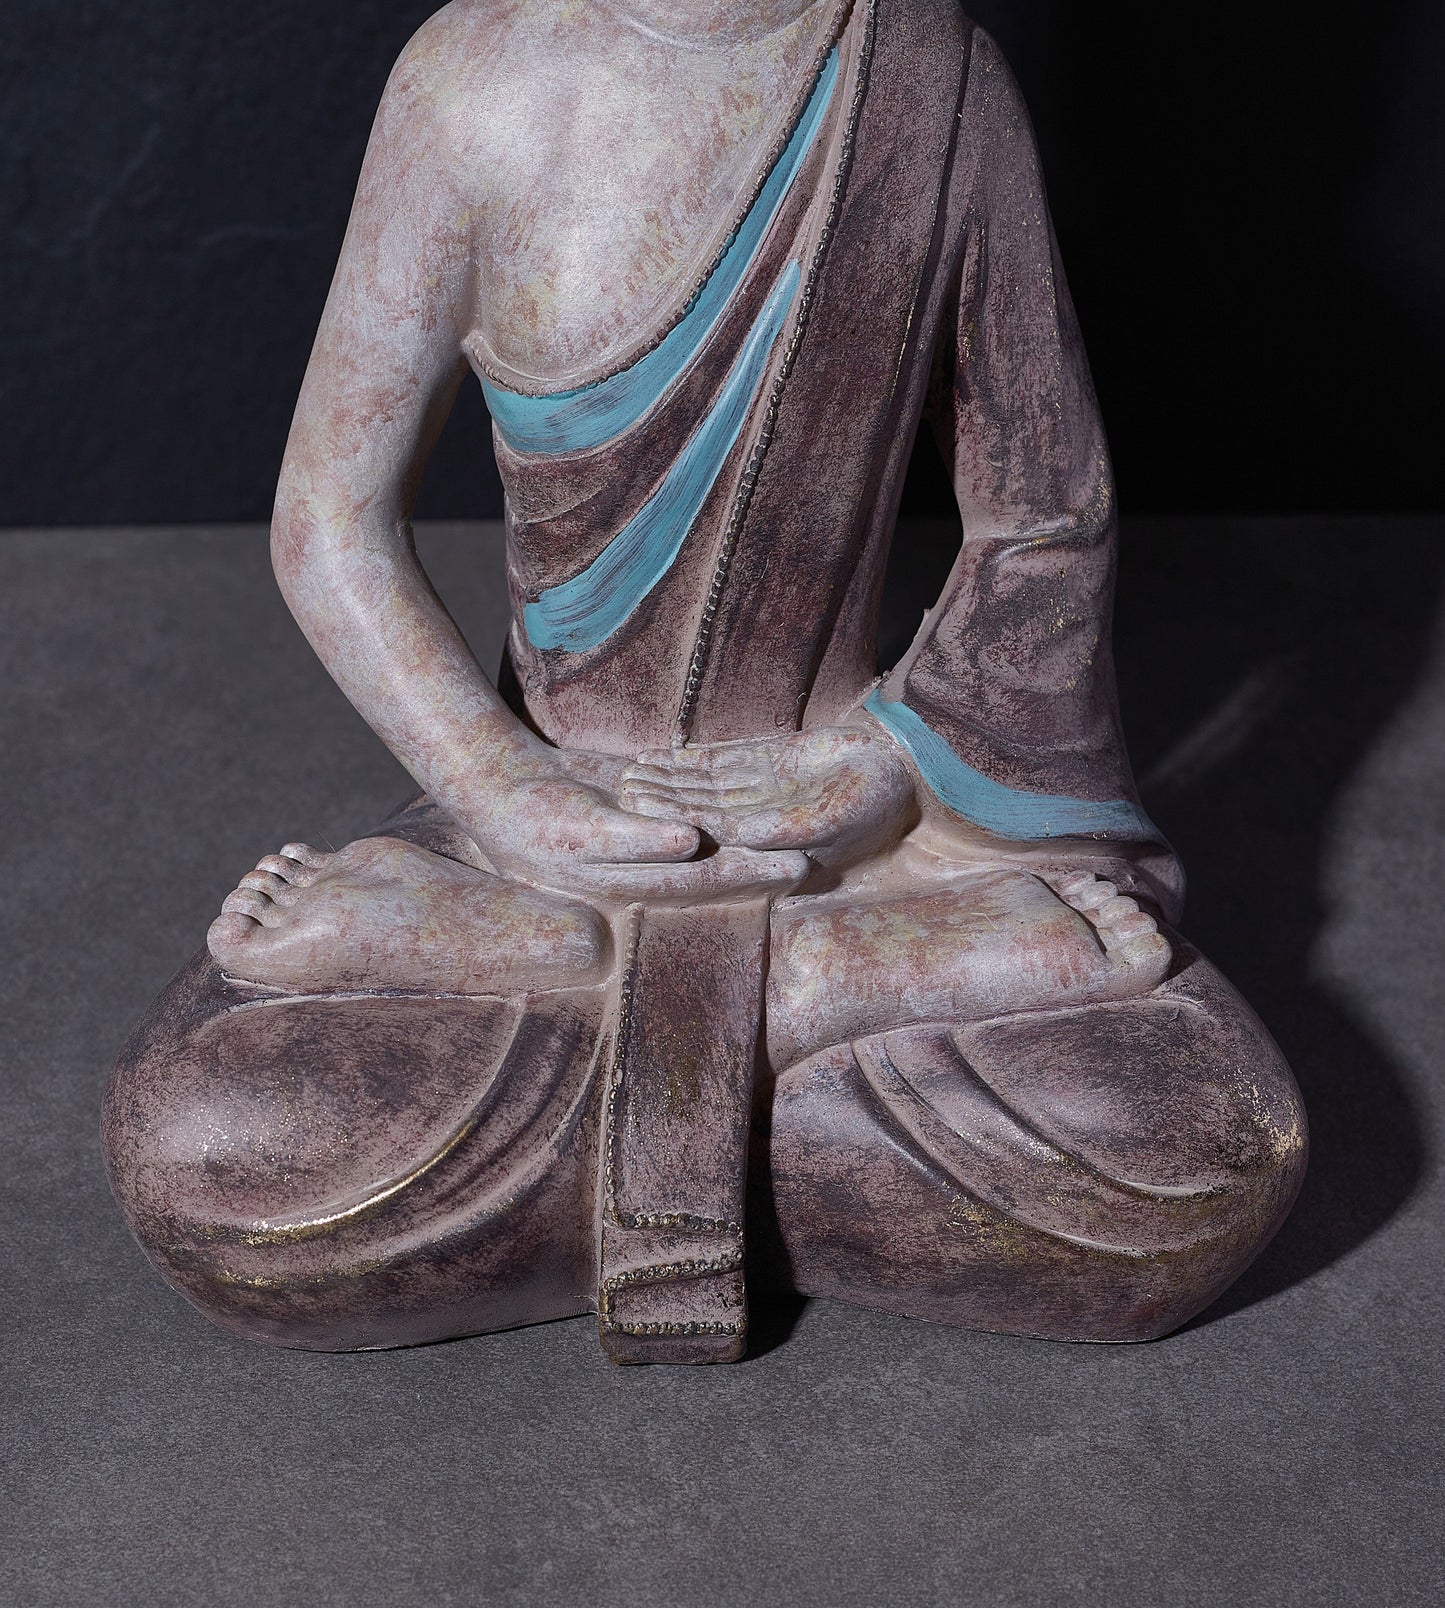 Rustic Sitting Buddha Statue